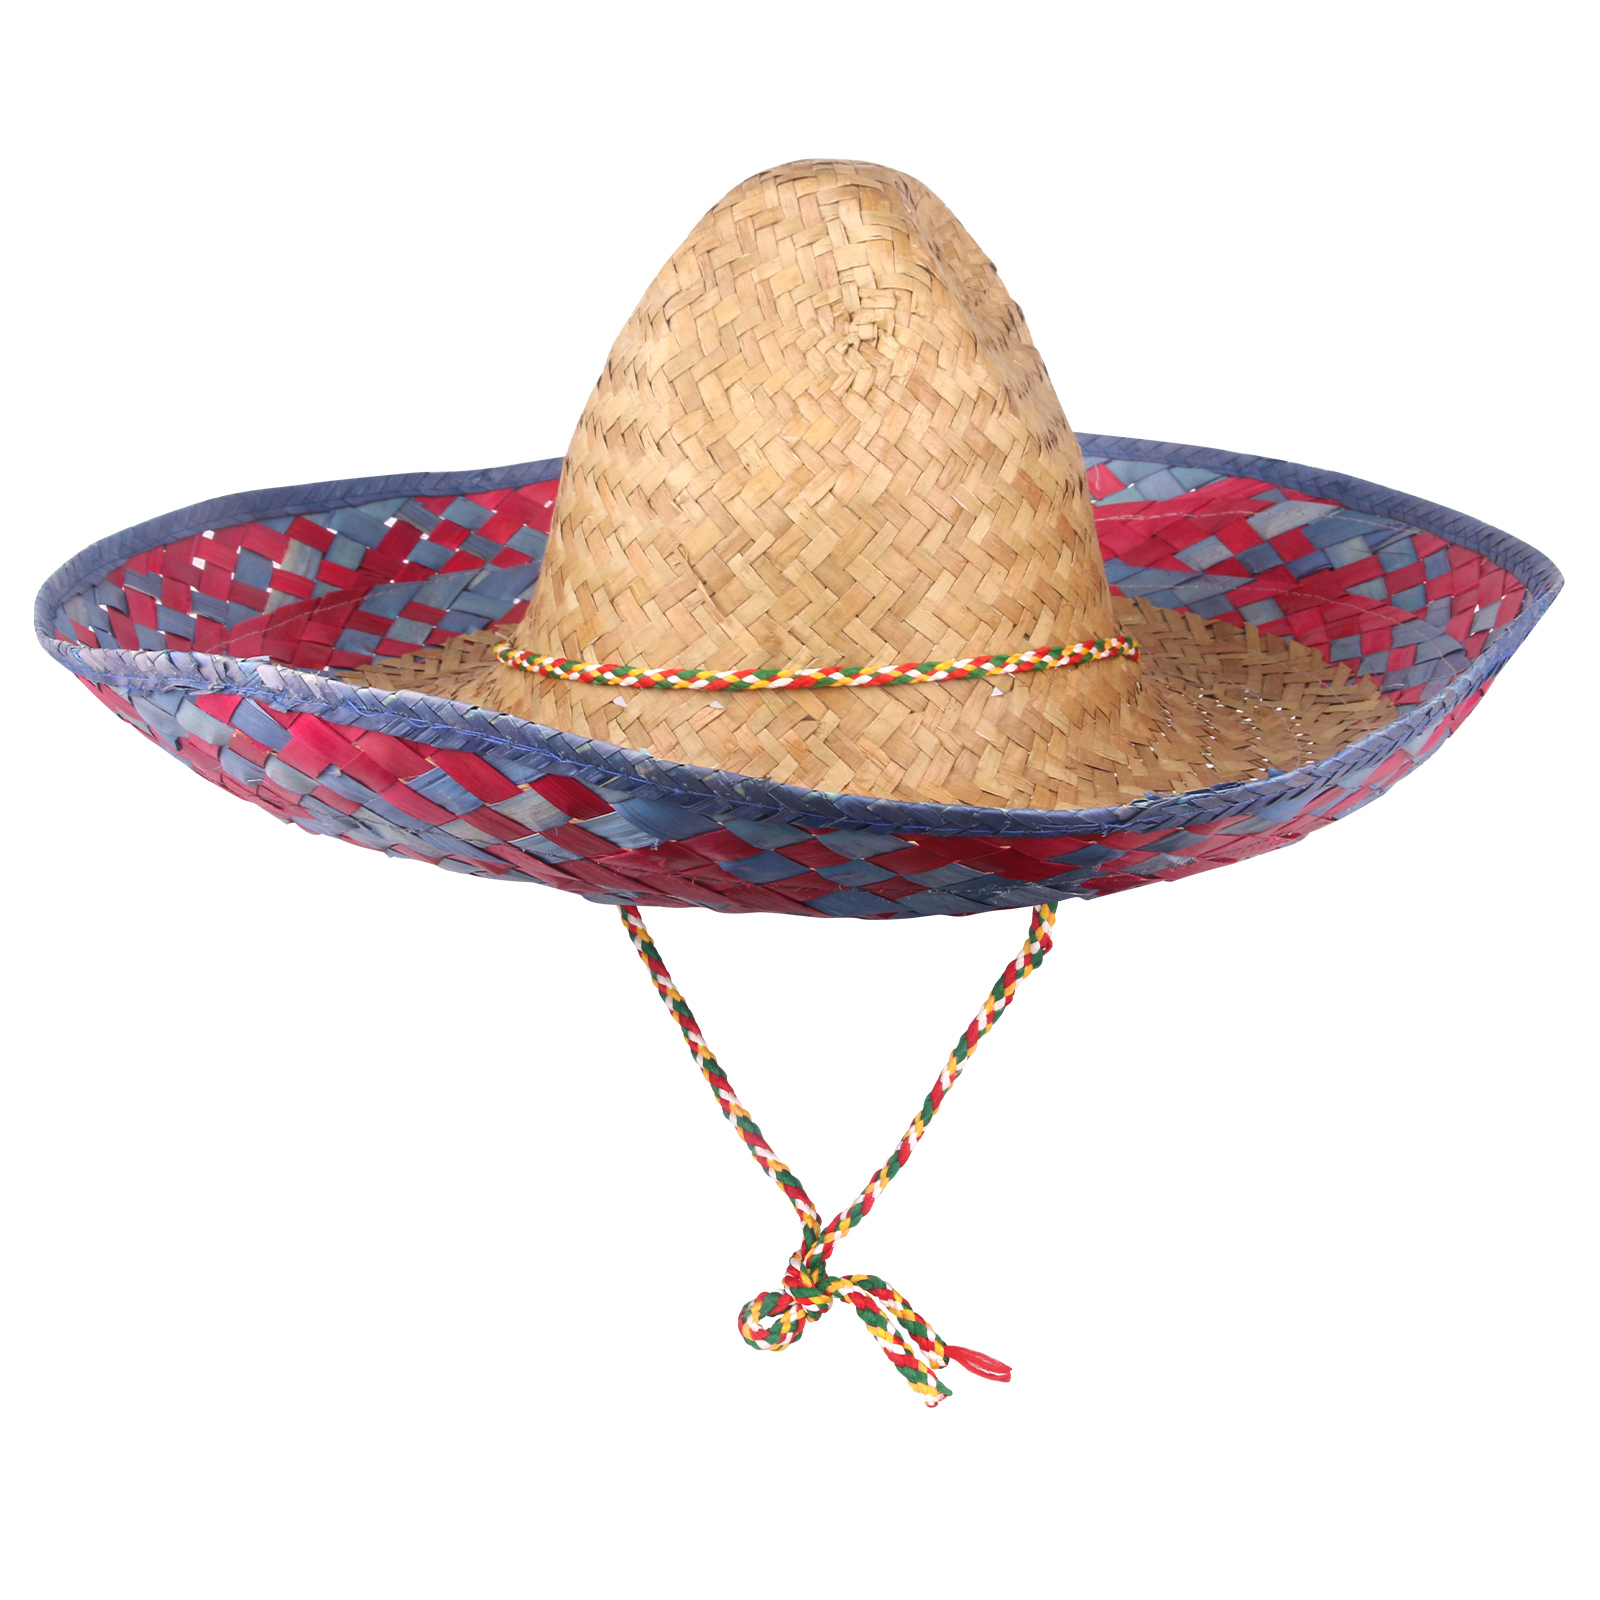 18inch Mexican Sombrero Hat, Straw Hat Mexican Costume Sombrero Kids Cinco de Mayo Spanish Fiesta - image 3 of 9